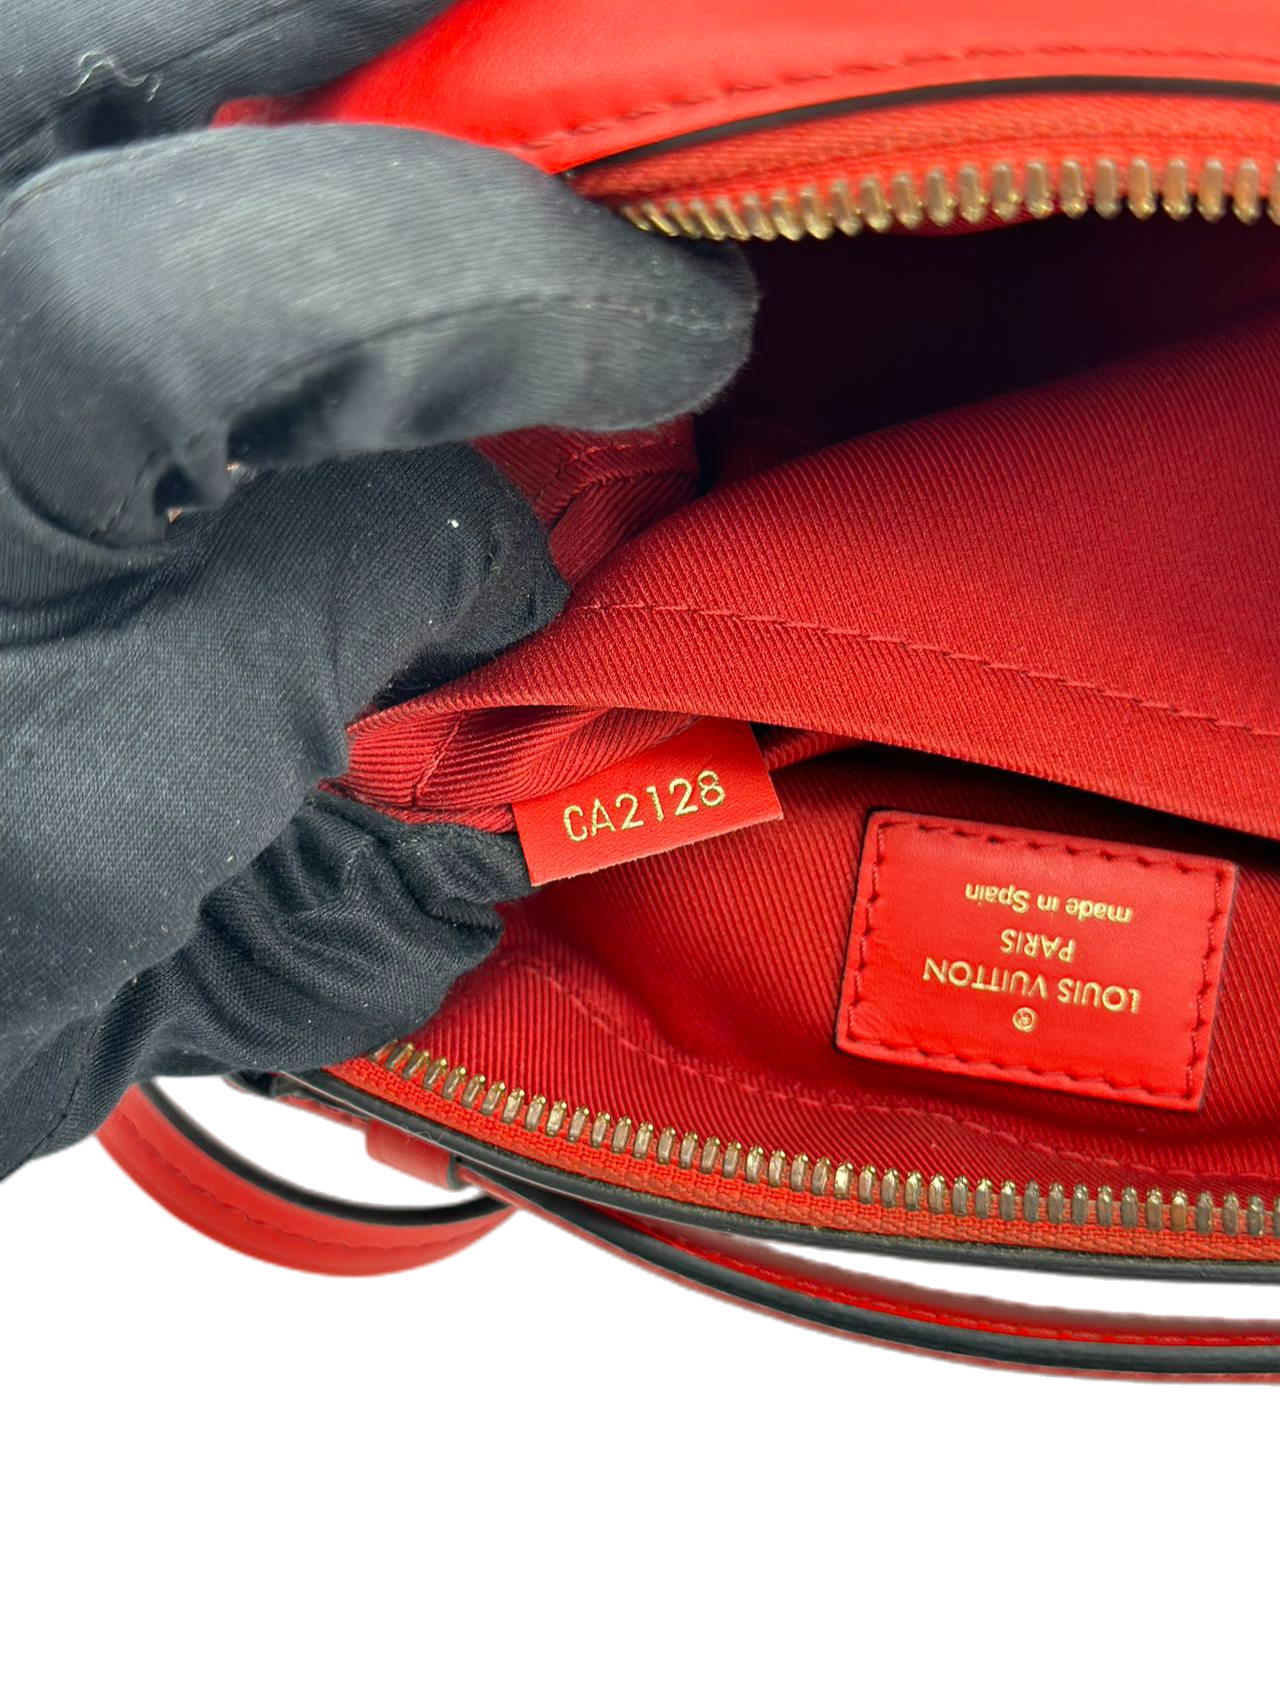 Preloved Louis Vuitton Monogram Canvas Saintonge Shoulder Bag Crossbody